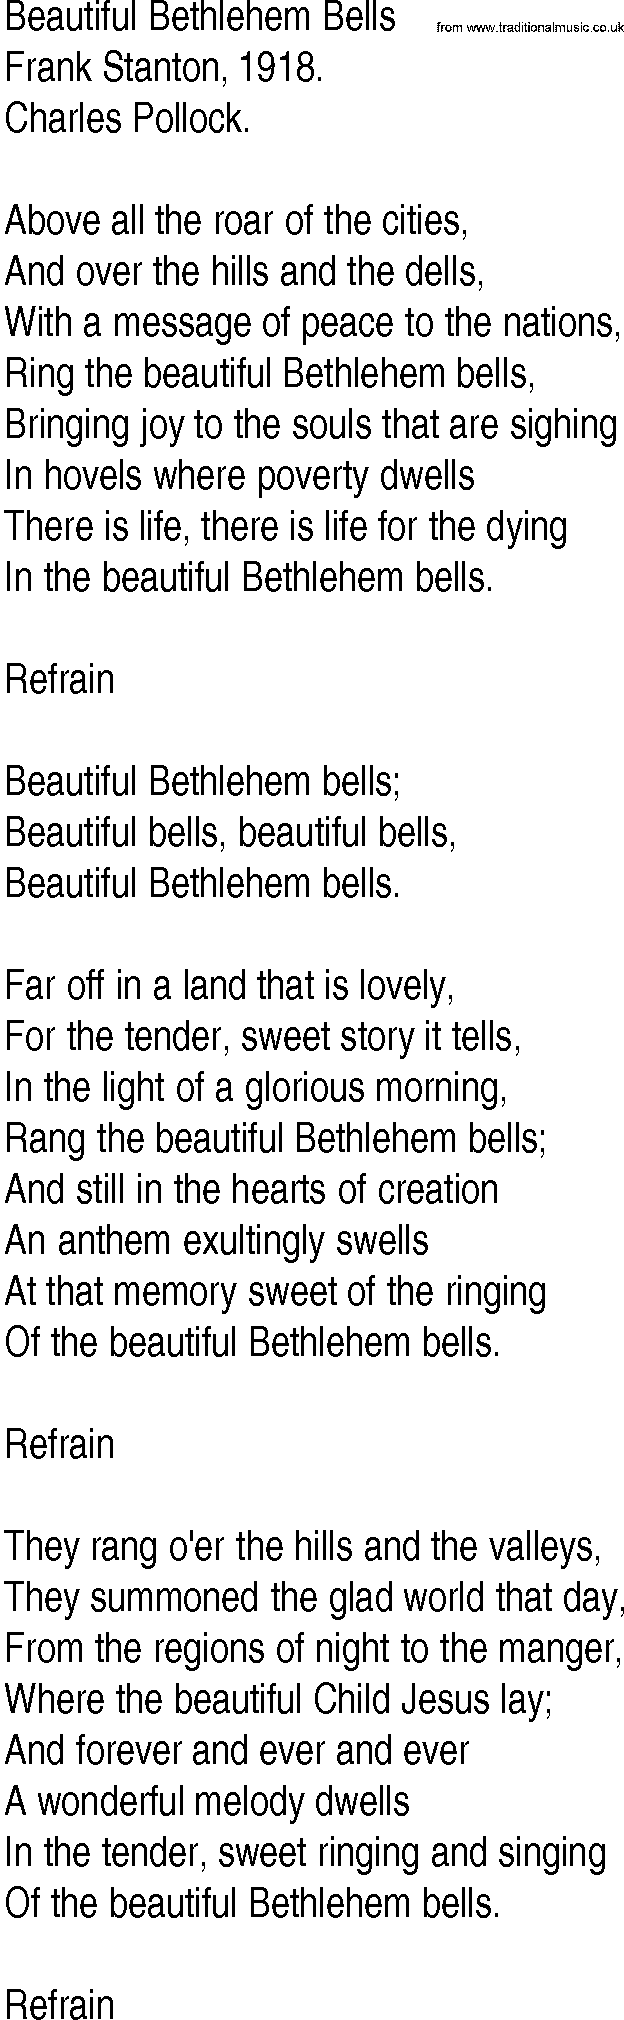 Hymn and Gospel Song: Beautiful Bethlehem Bells by Frank Stanton lyrics